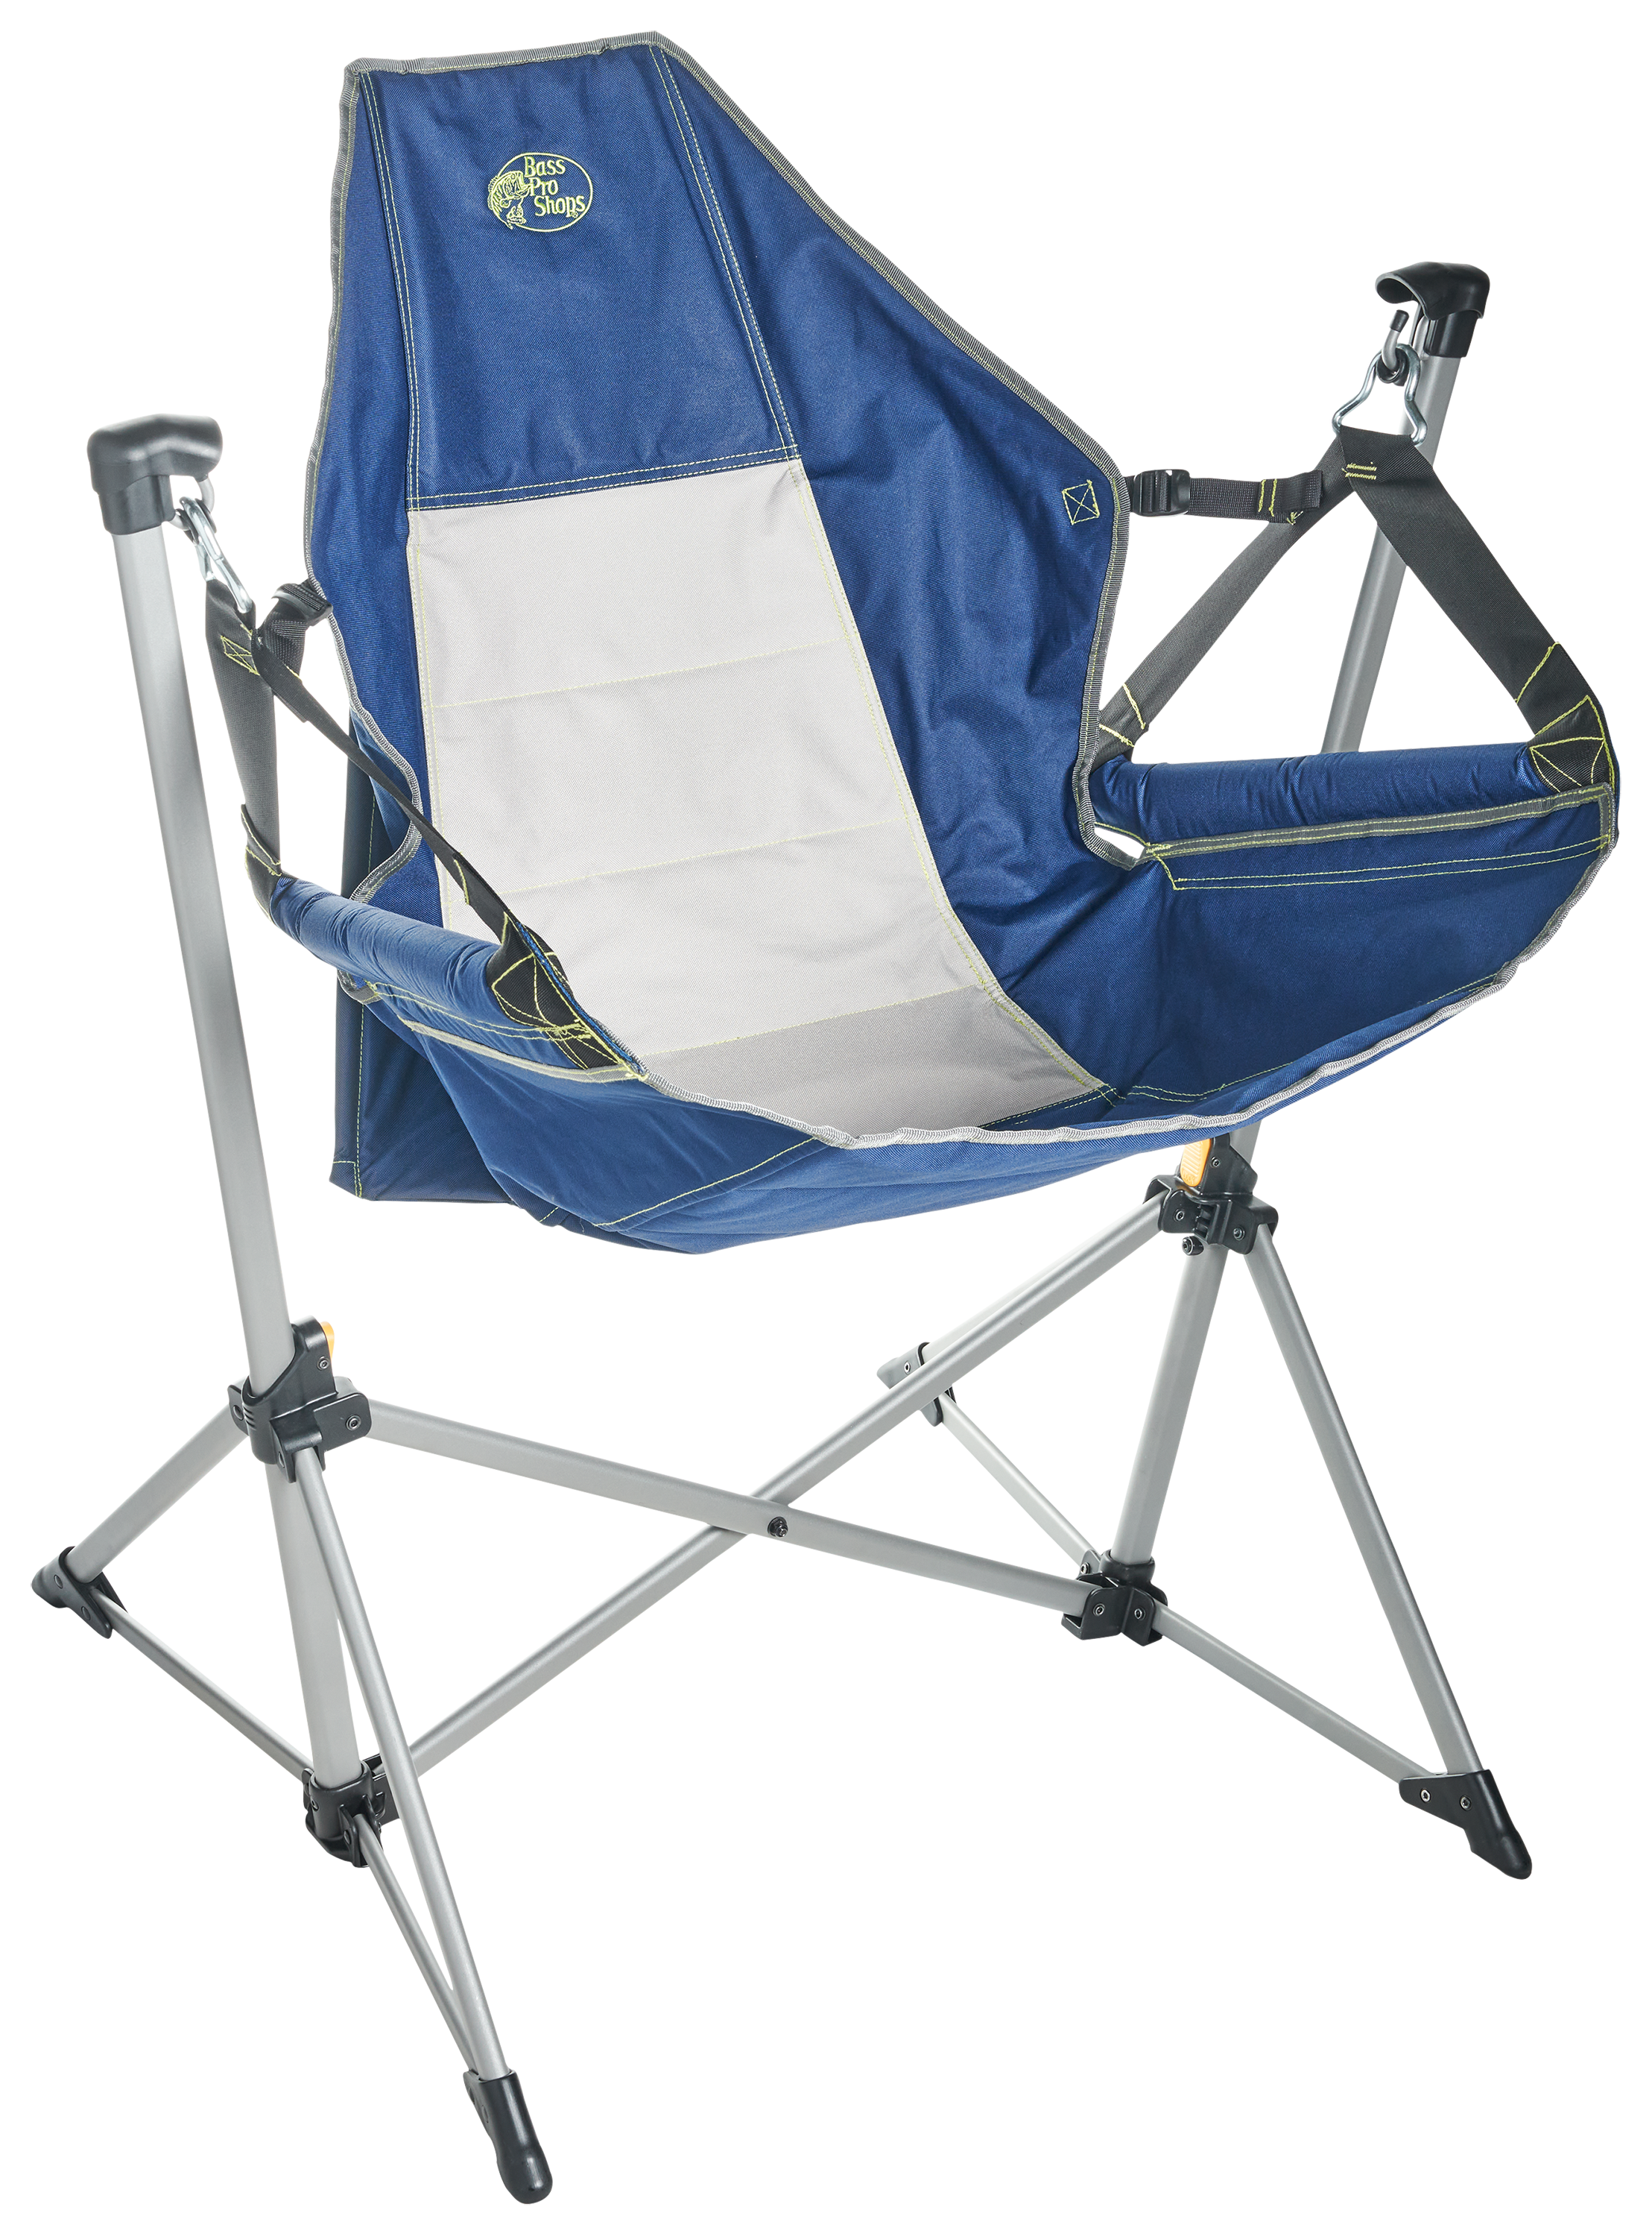 Bass Pro Shops Hammock Camp Chair